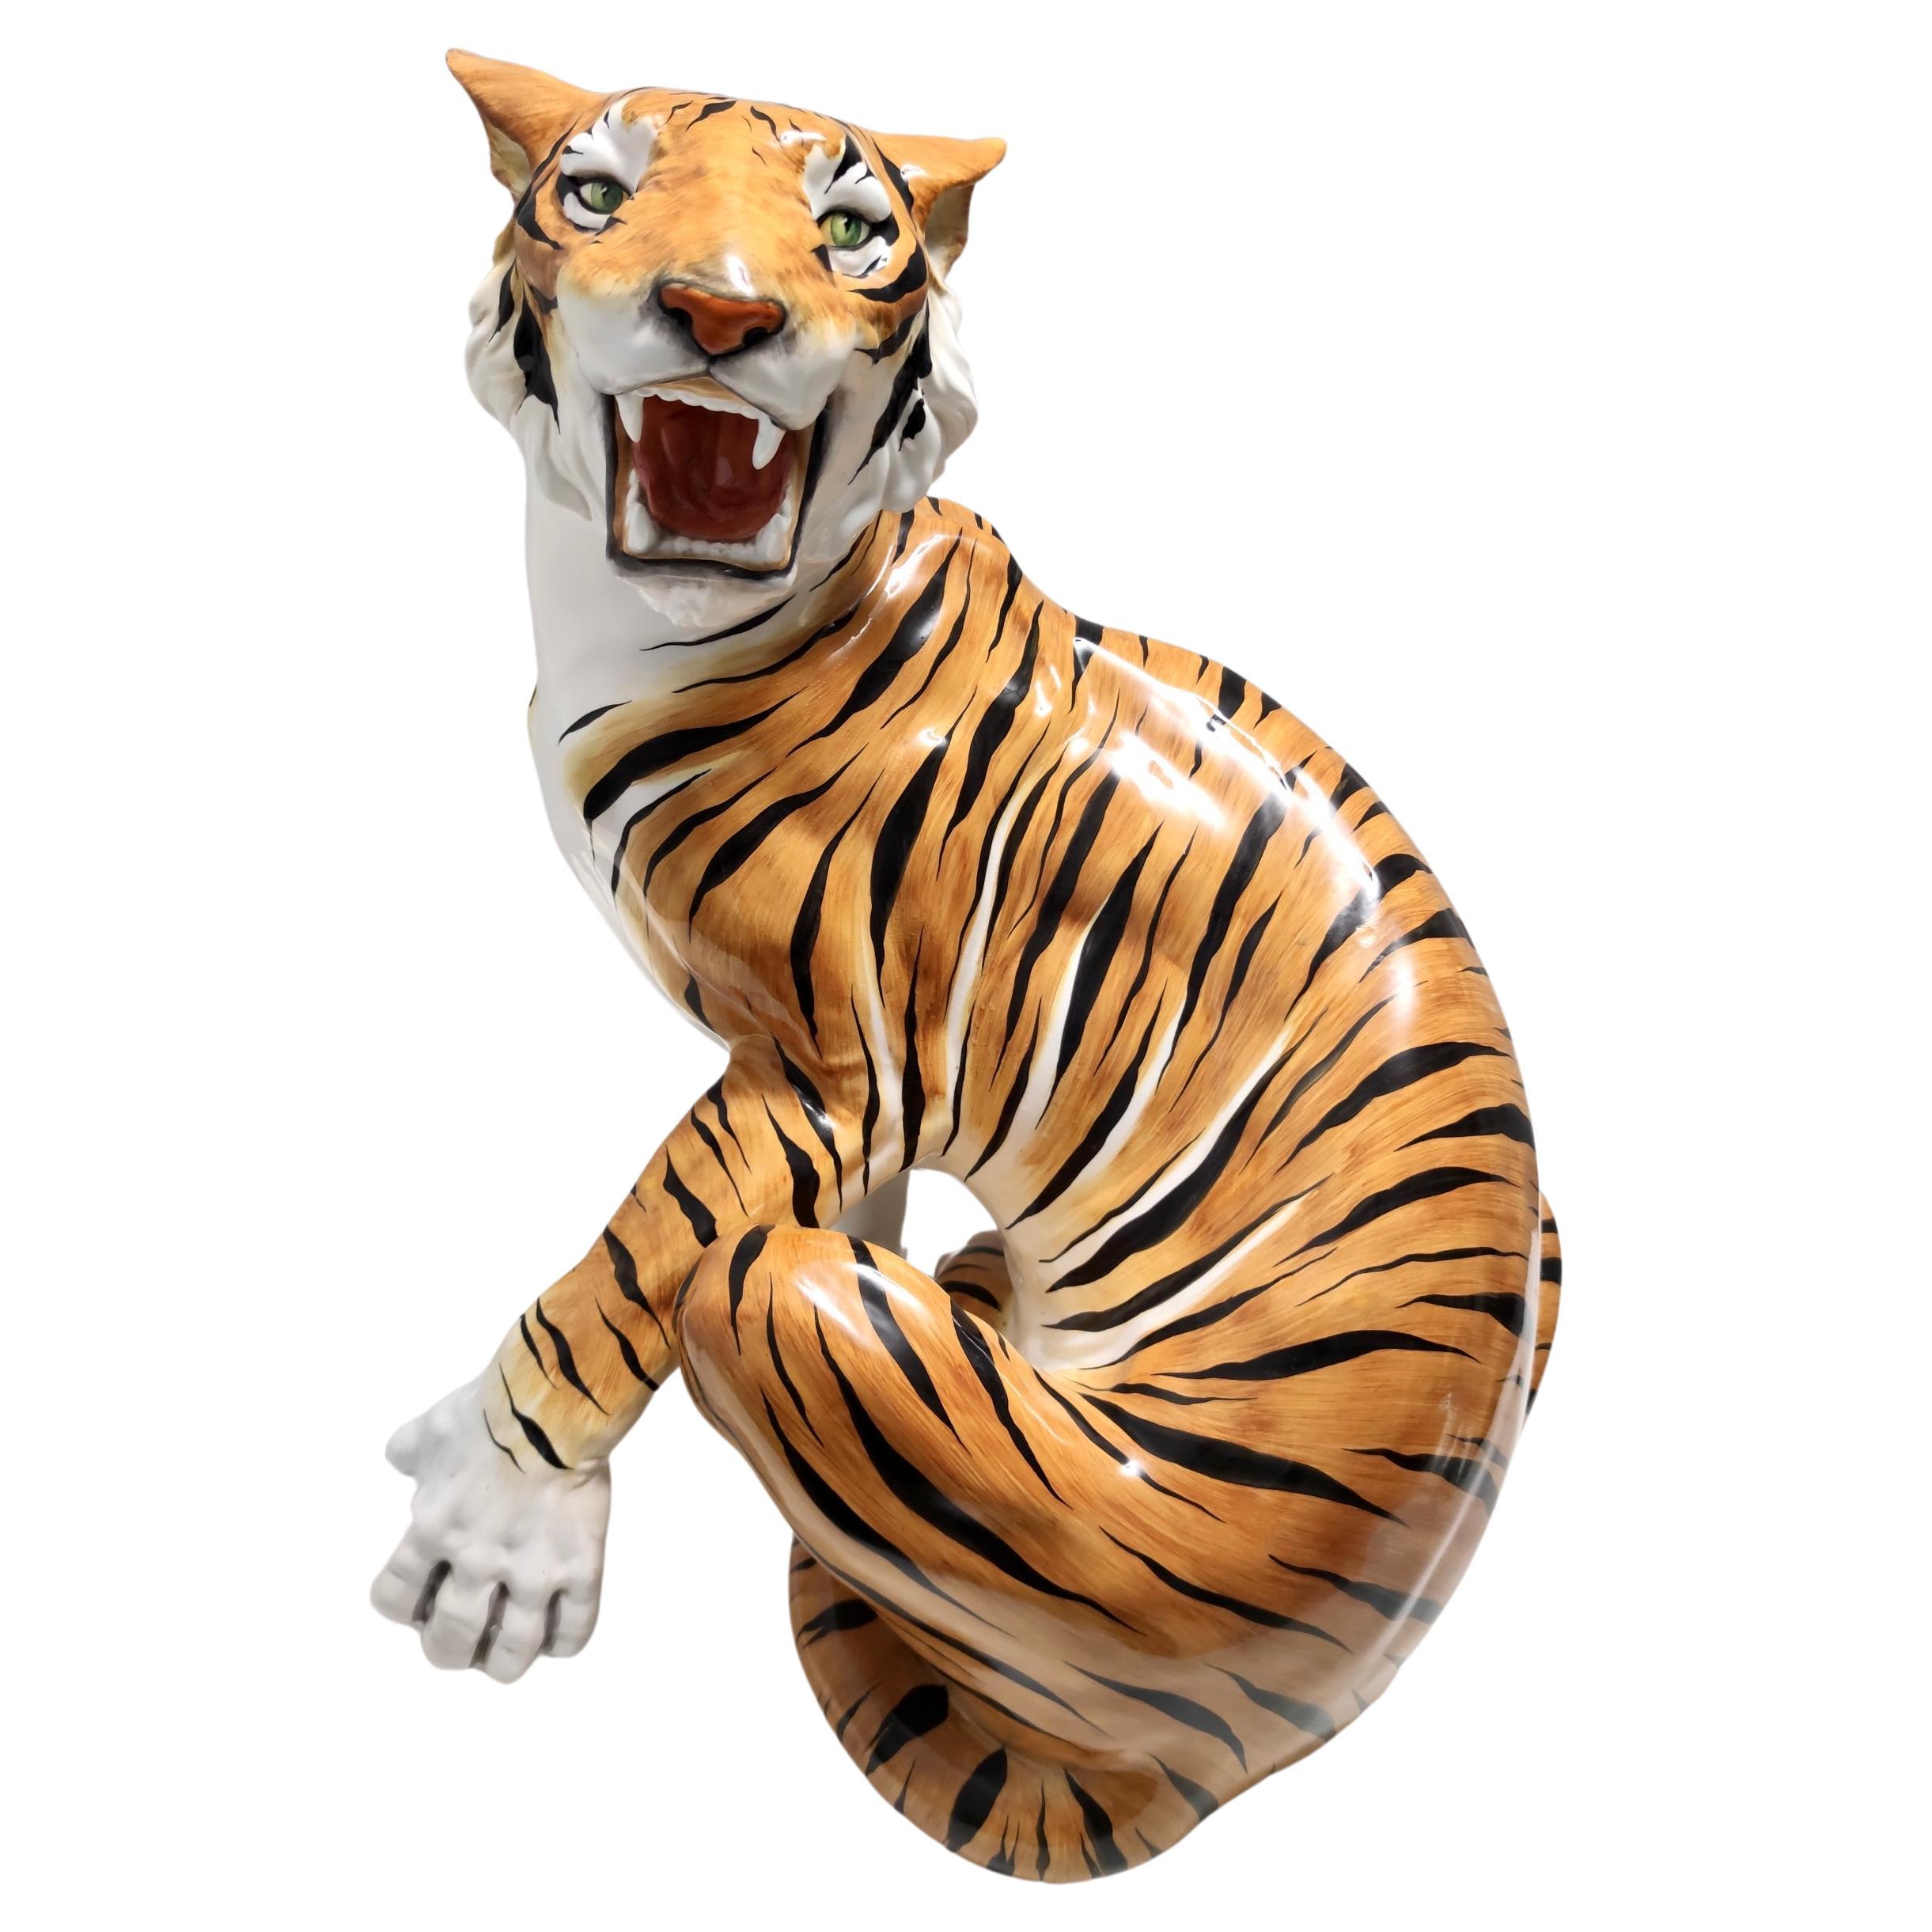 Grand tigre rugissant, céramique peinte à la main, Italie